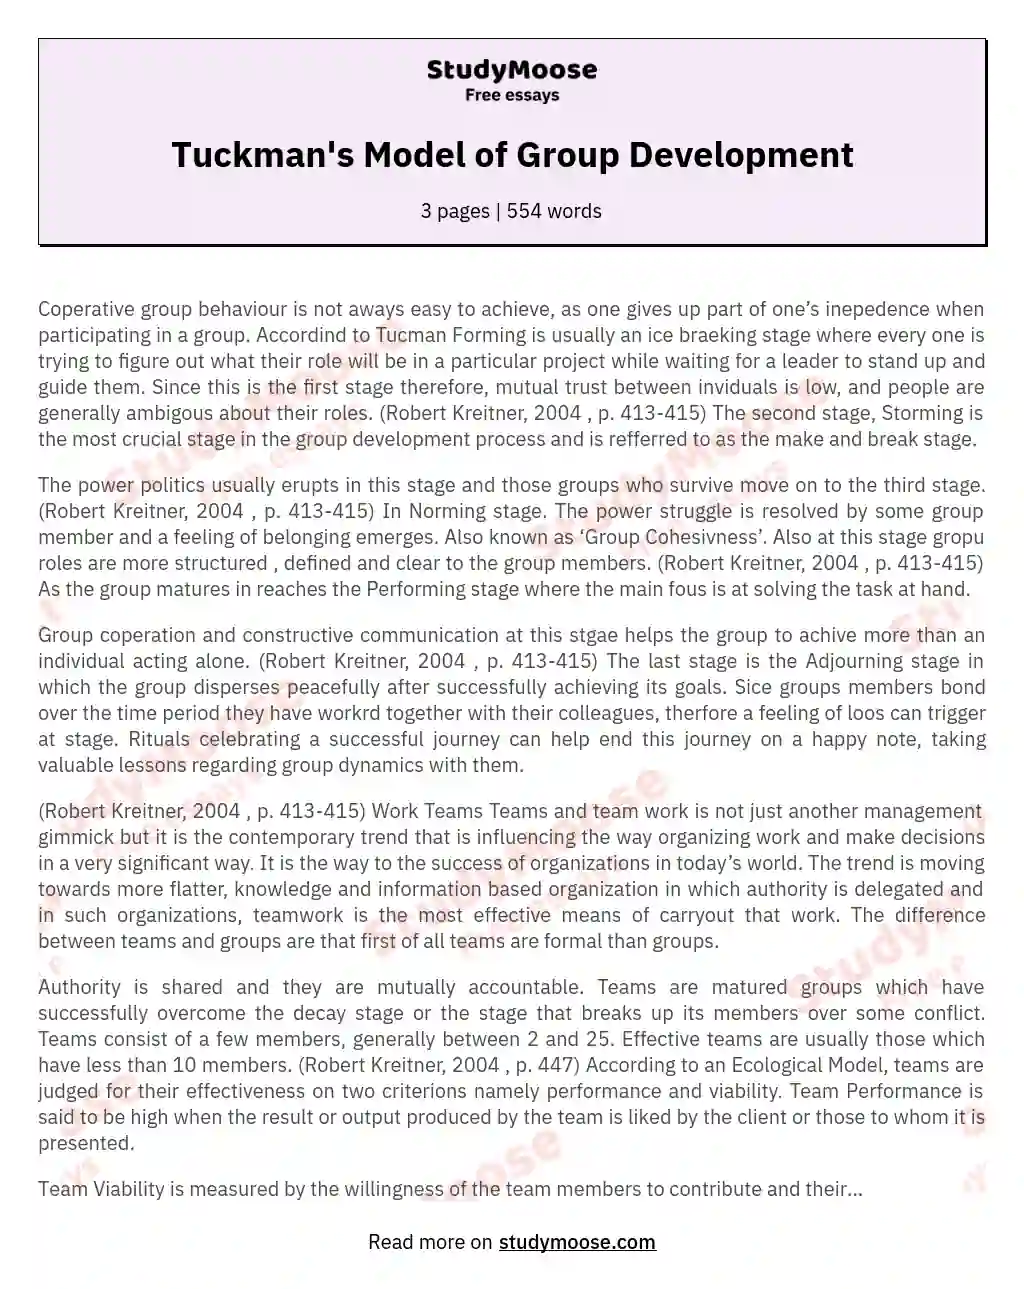 Tuckman's Model of Group Development essay